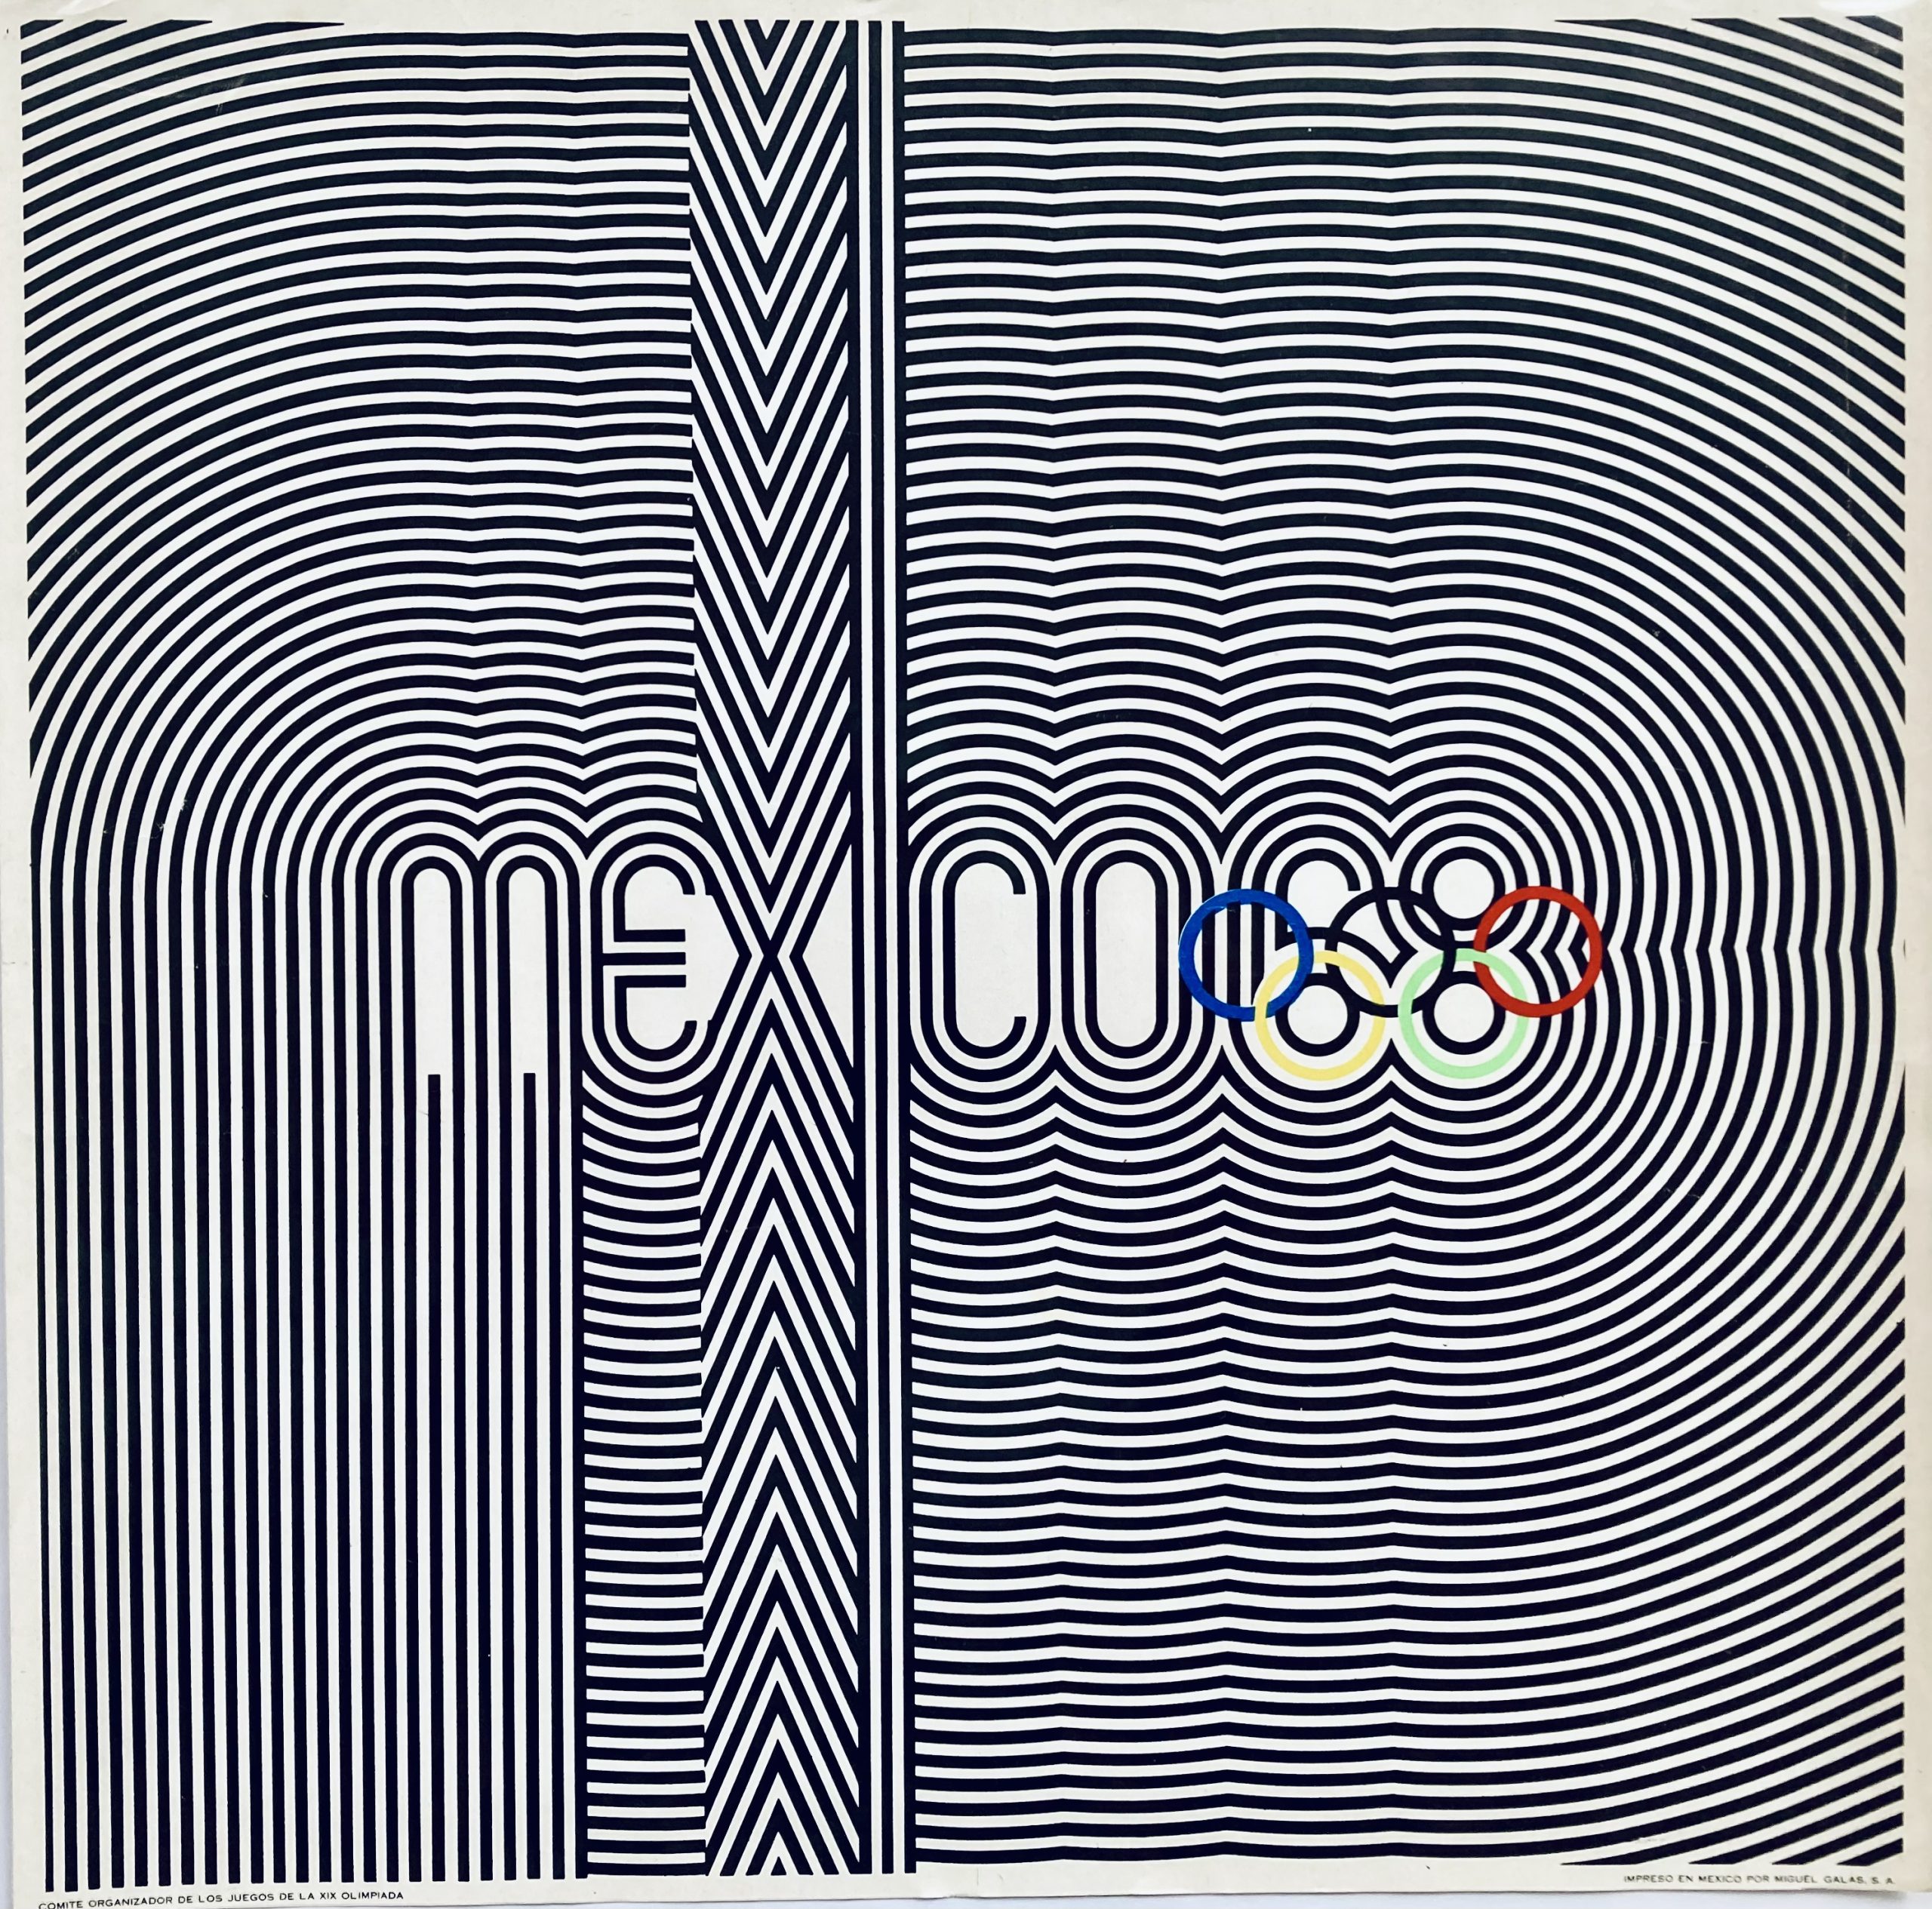 Mexico Olympics 1968 Lance Wyman Kiki Werth Original Vintage Posters